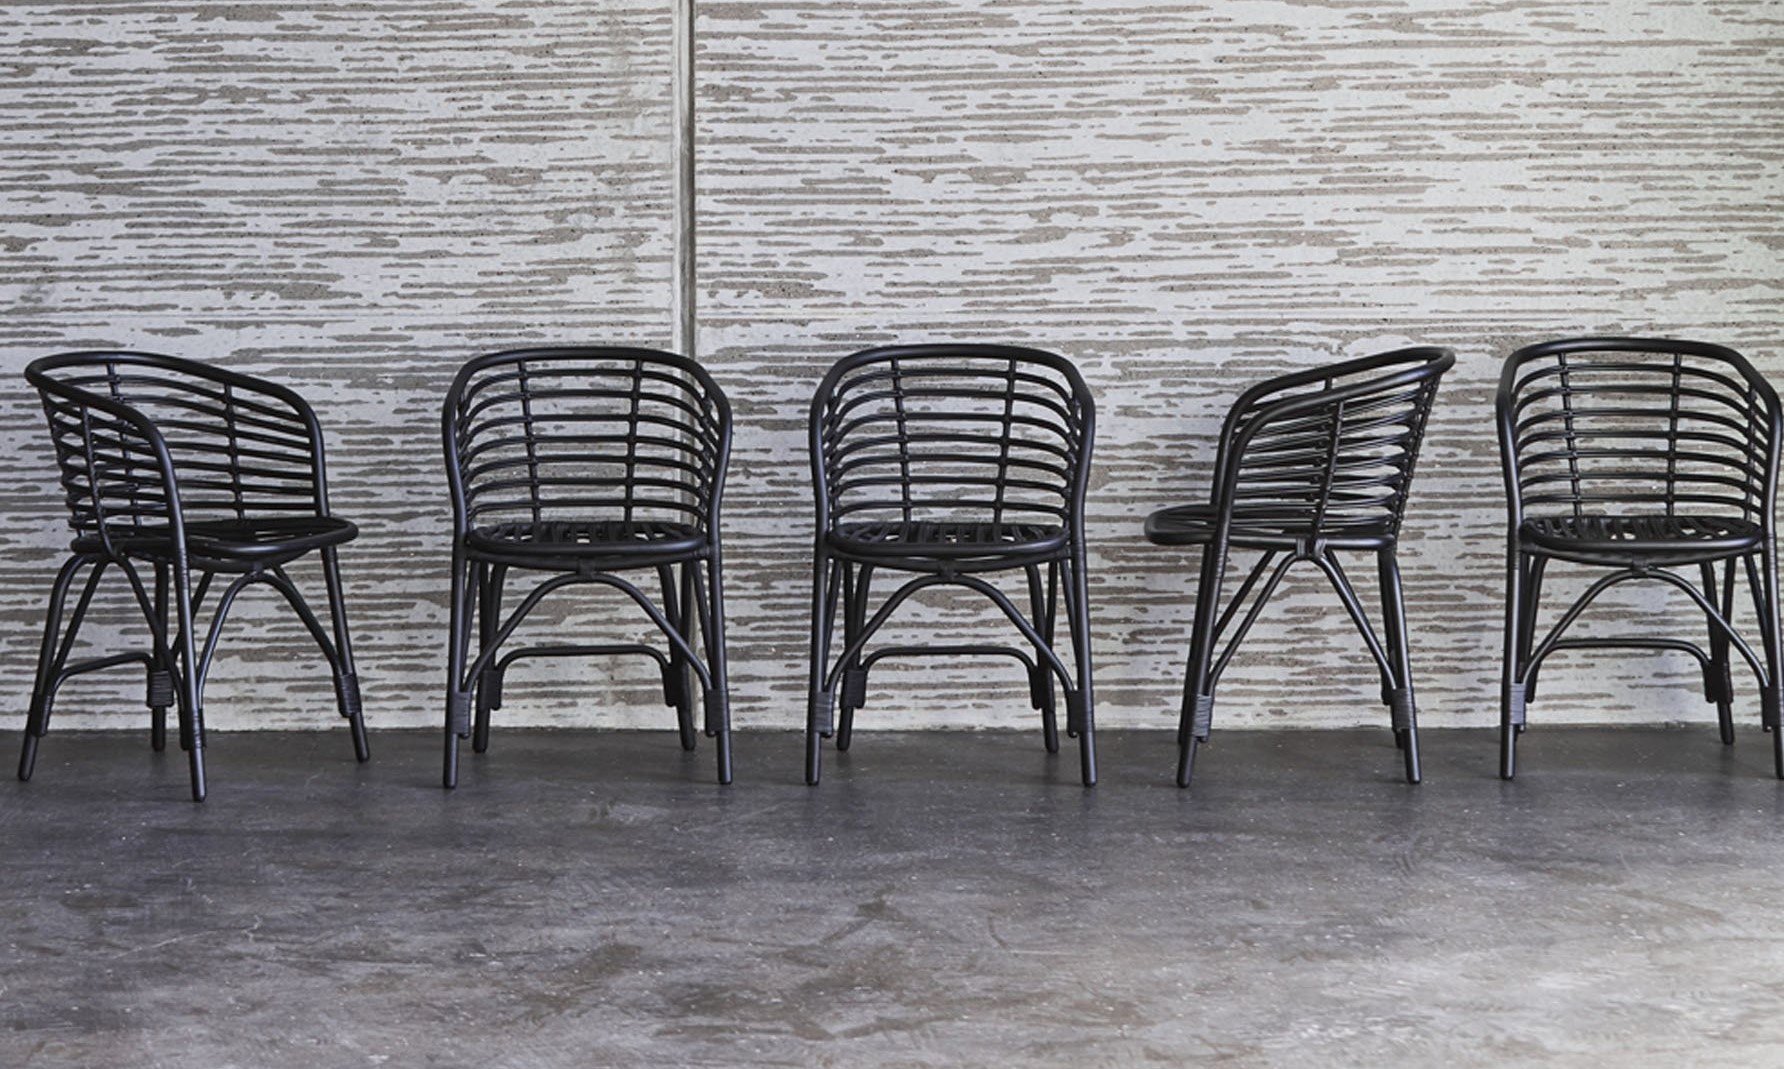 Blend Indoor Armchair from Cane-line, designed by Foersom & Hiort-Lorenzen MDD